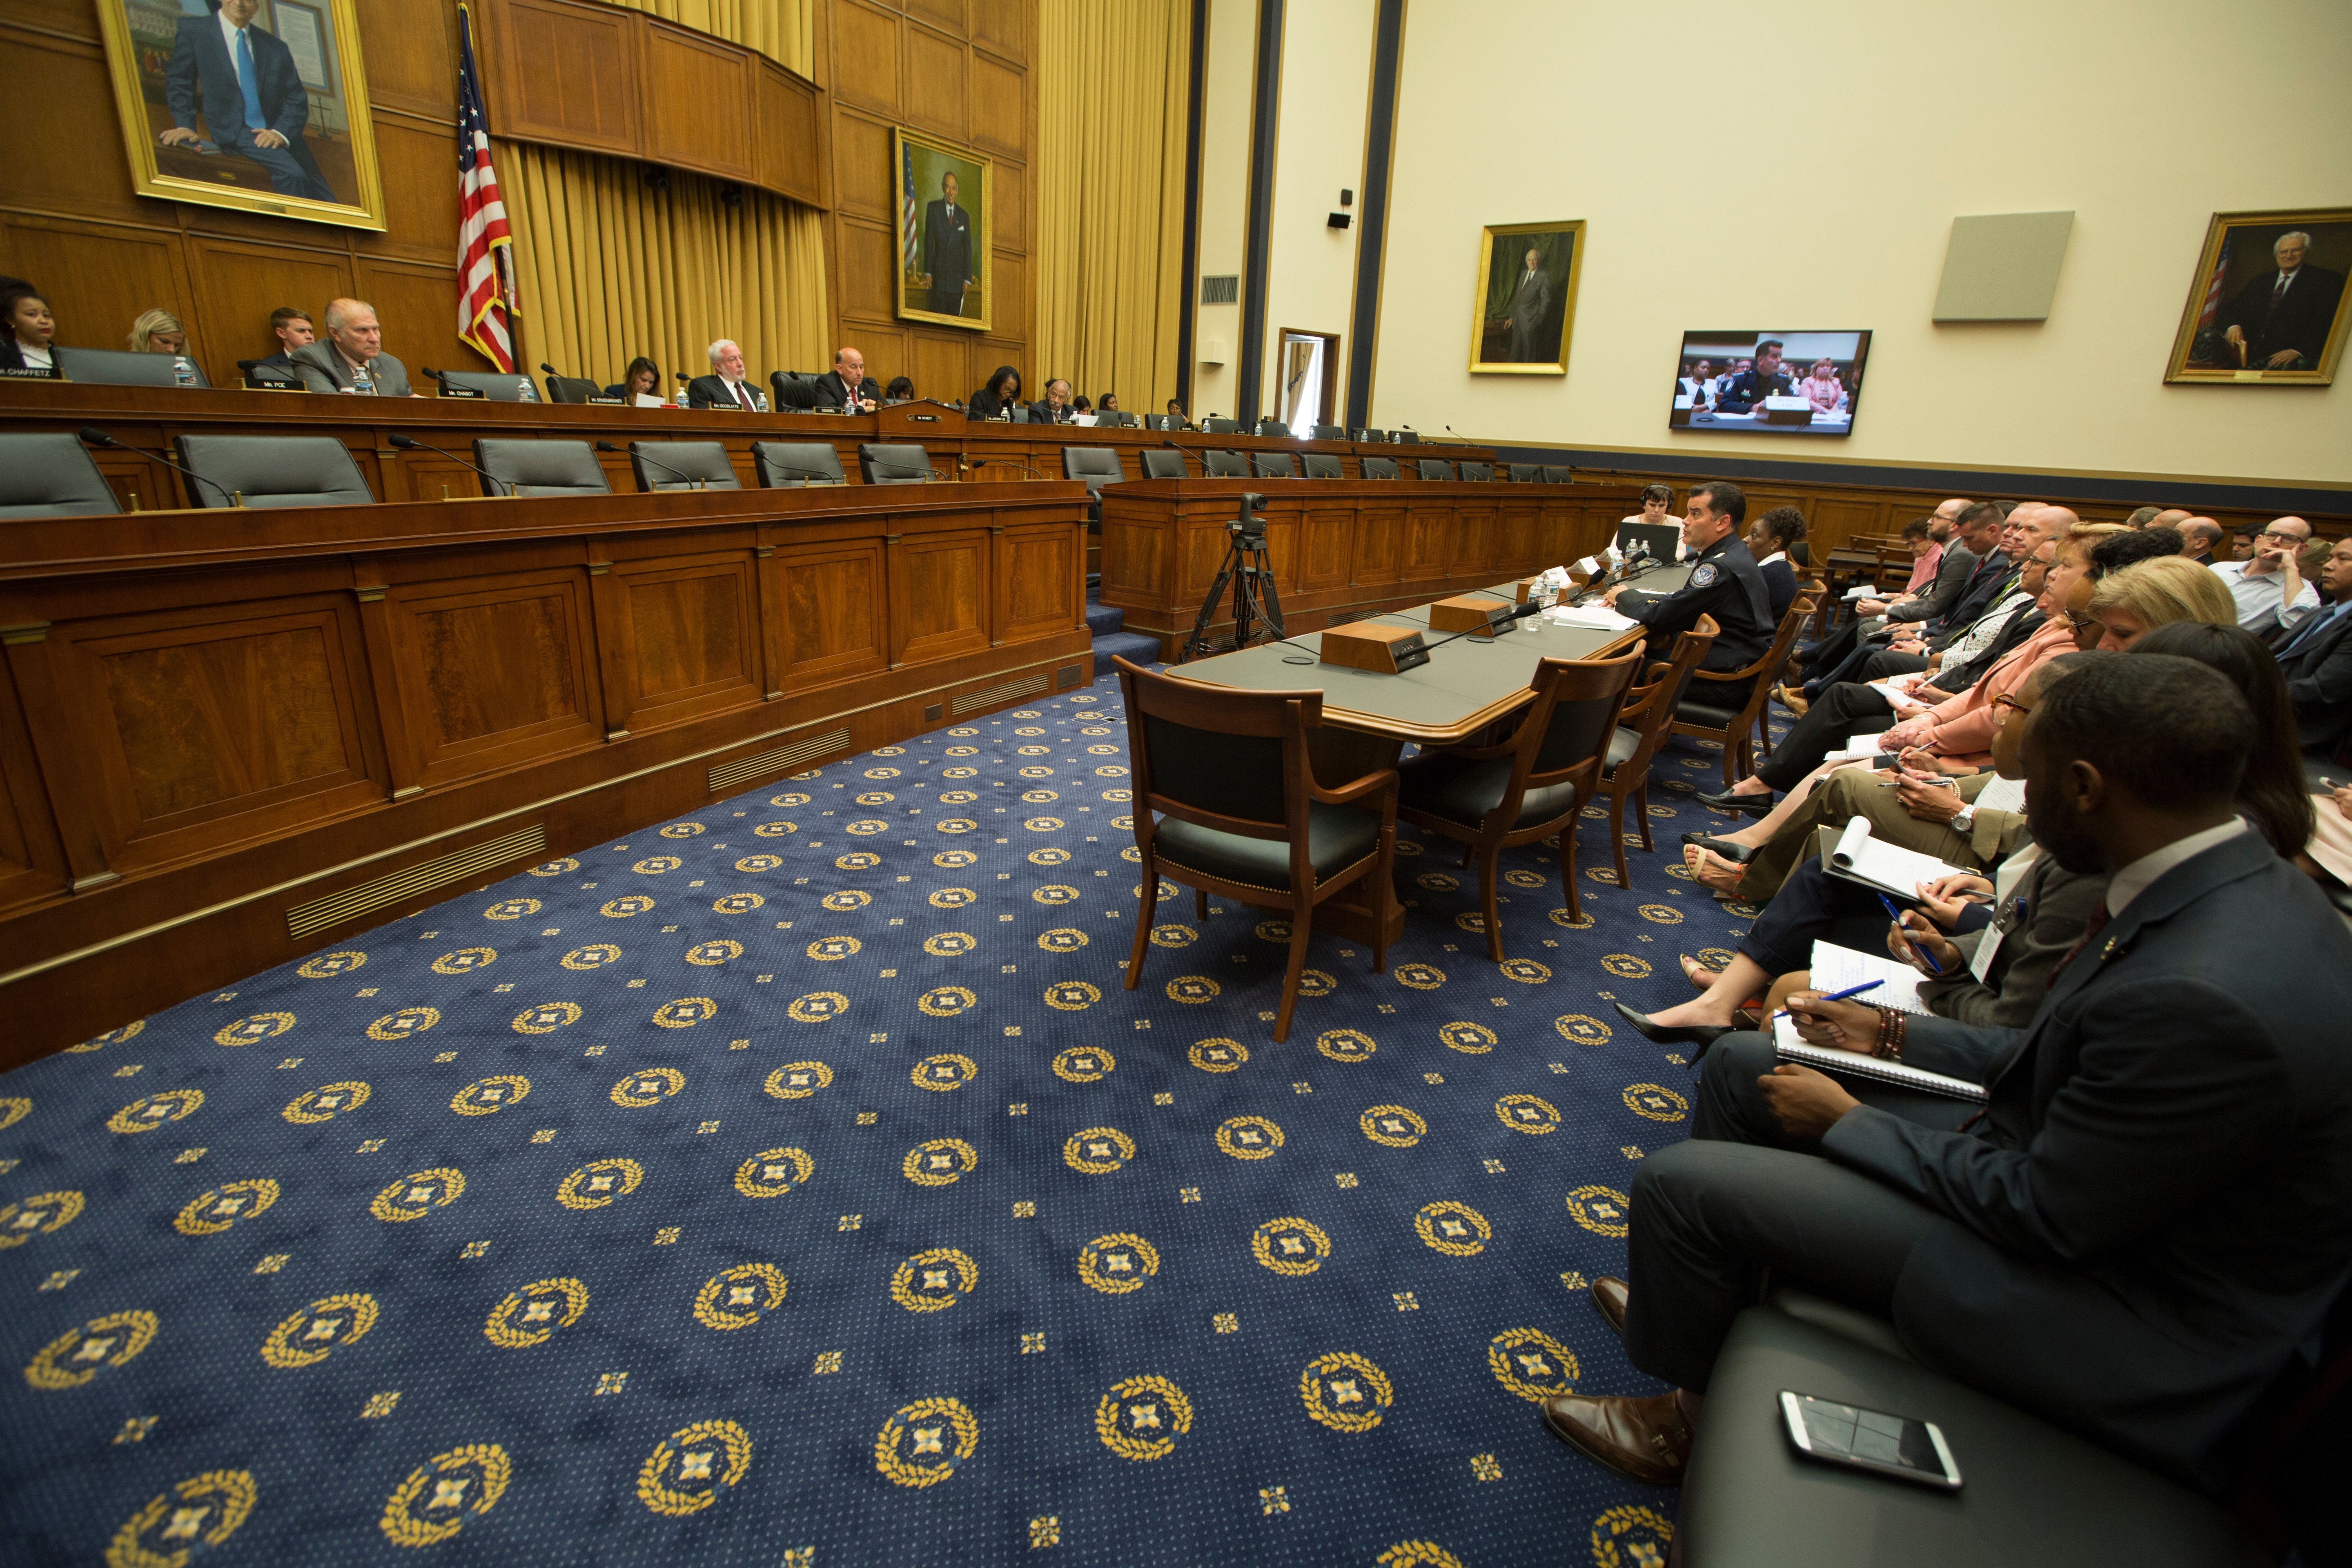 Facebook, Amazon, Apple, Google CEOs To Testify Before House Antitrust Subcommittee Wednesday